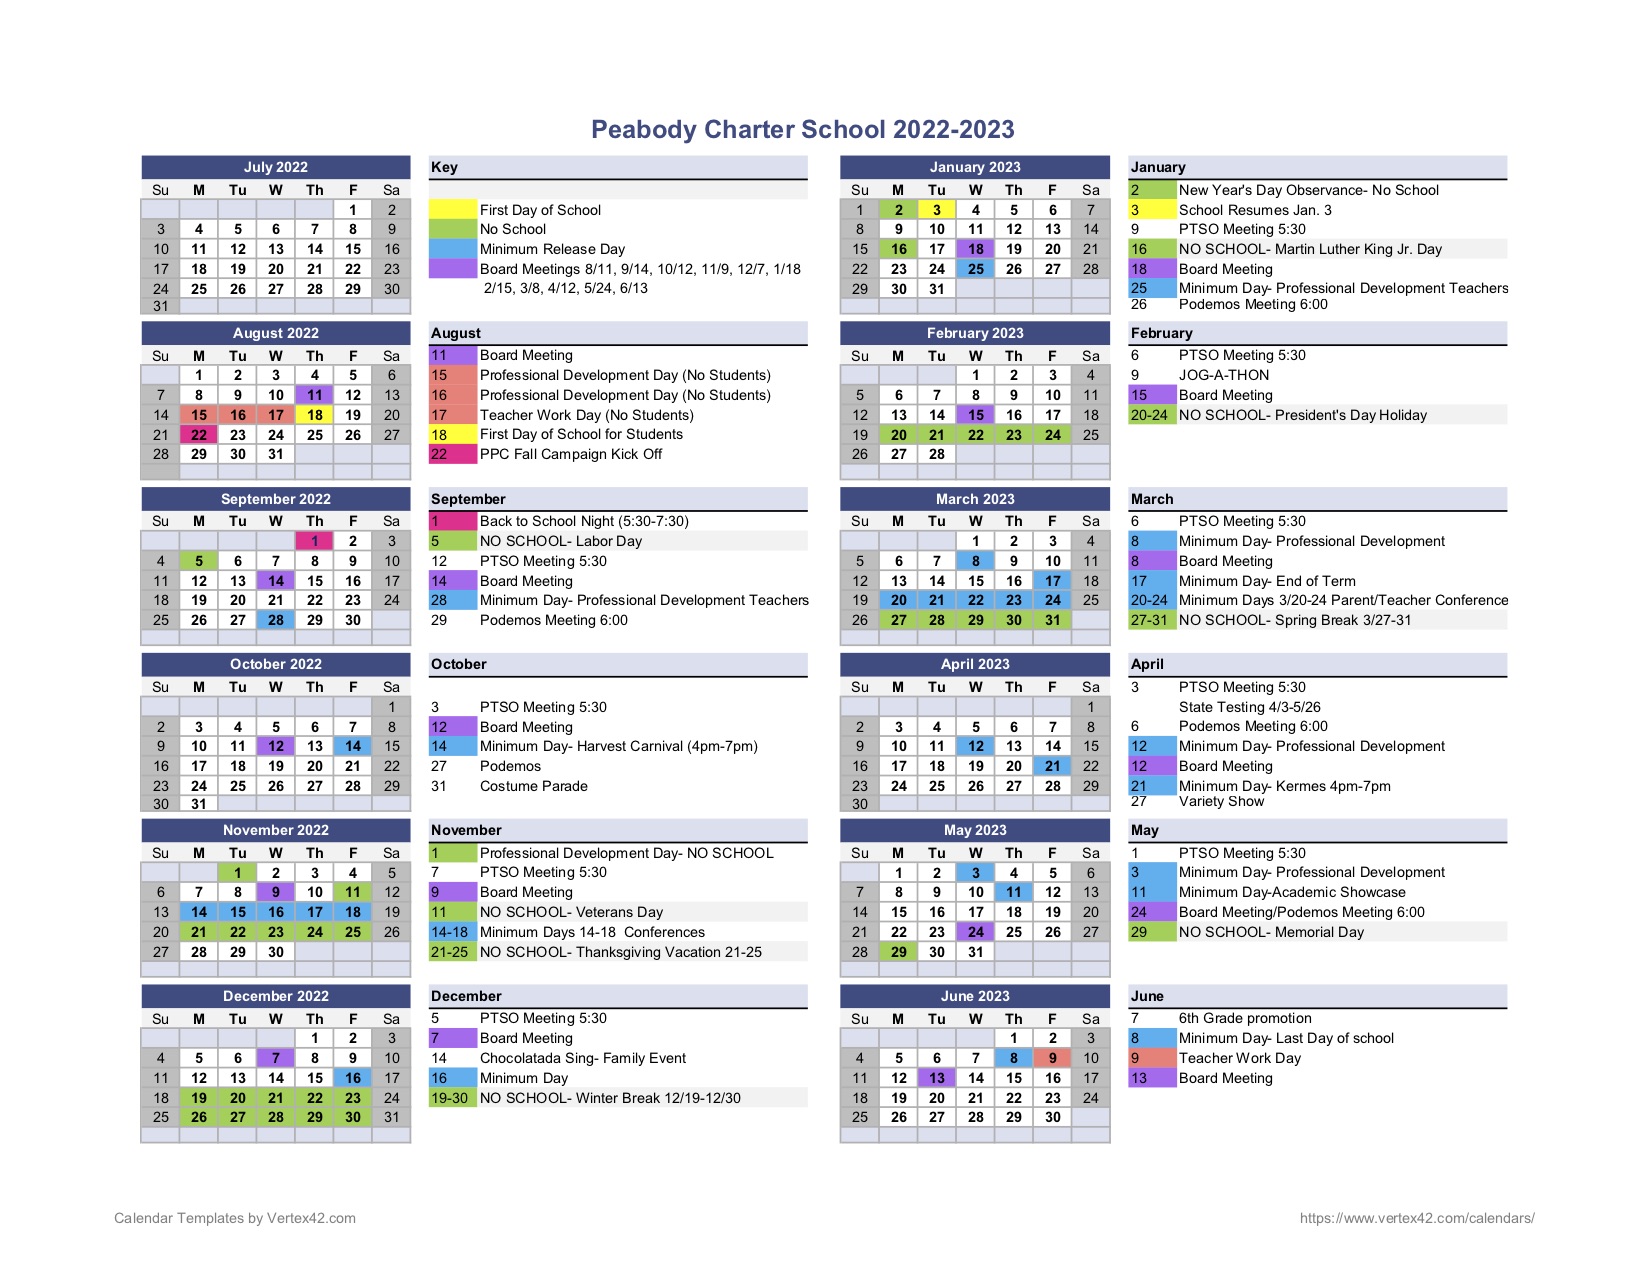 Peabody Calendar 2022-2023